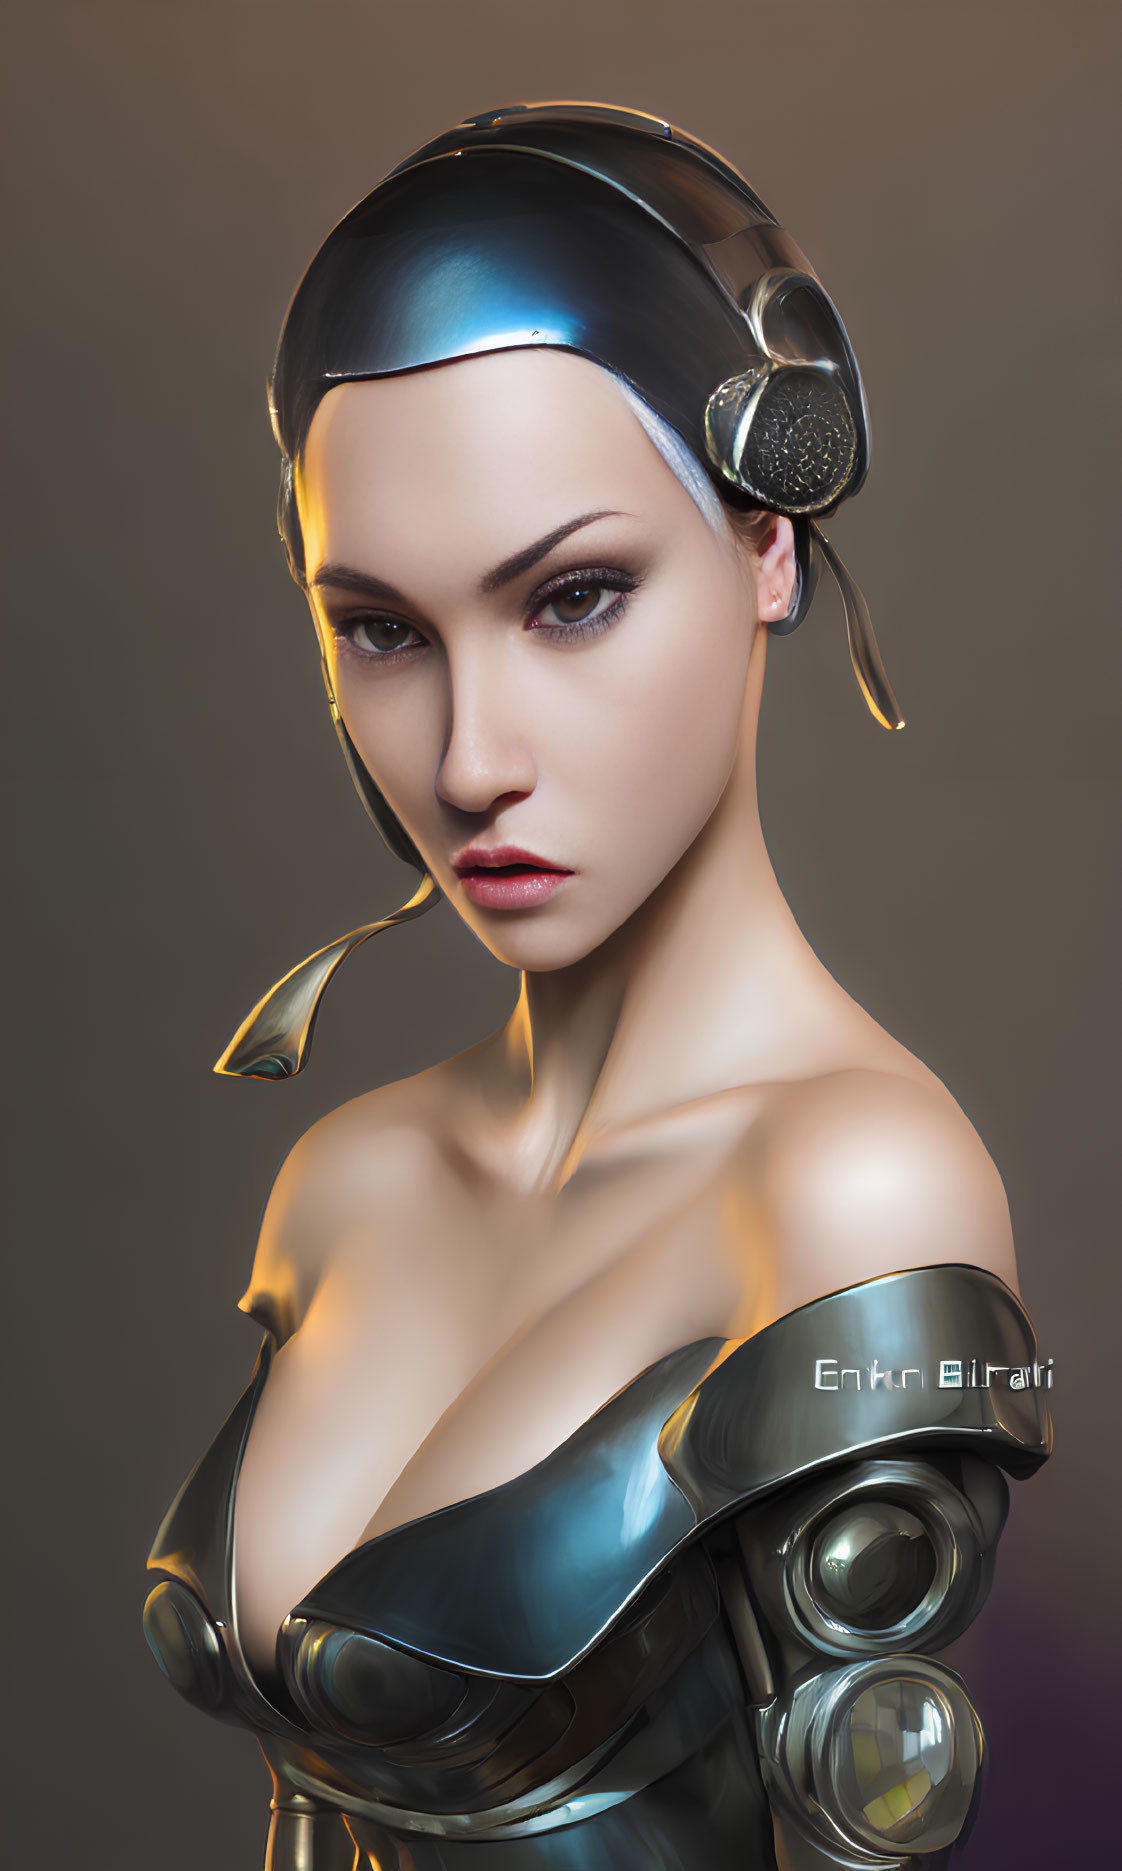 Futuristic digital artwork of woman with cybernetic enhancements